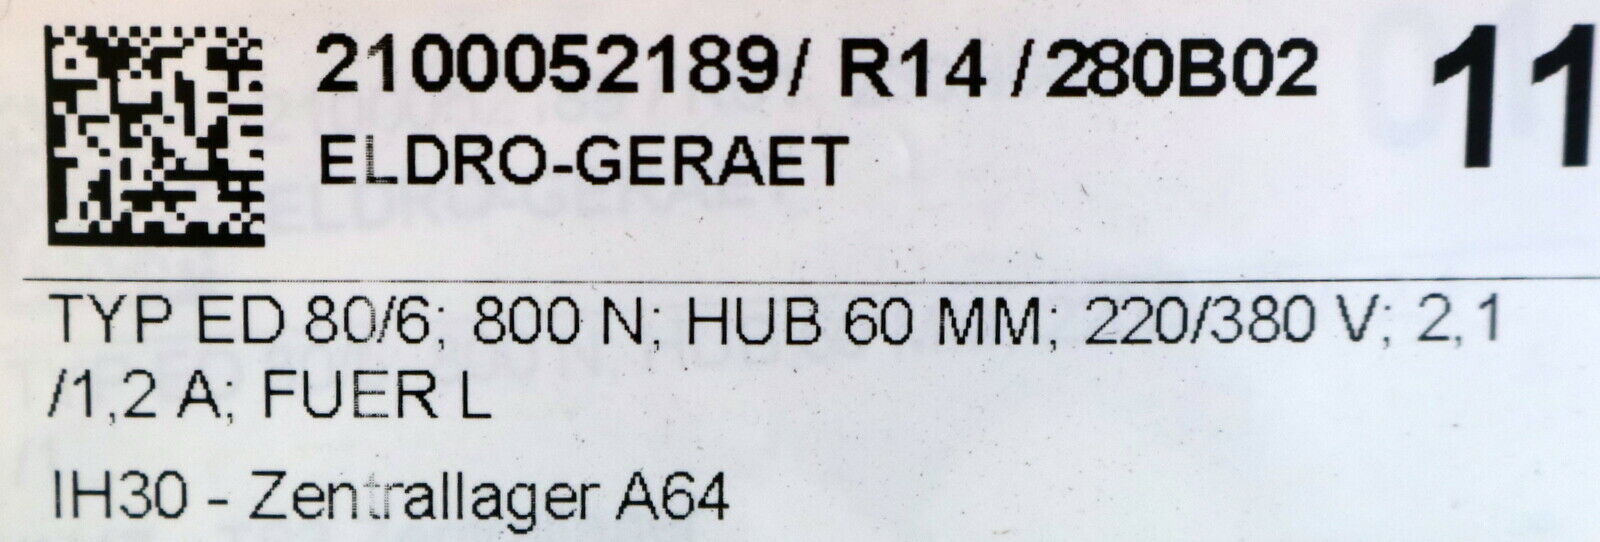 AEG EMG ELDRO Elektrohydraulisches Hubgerät ED80/6 dC-H Hubkraft 800N Hub 60mm